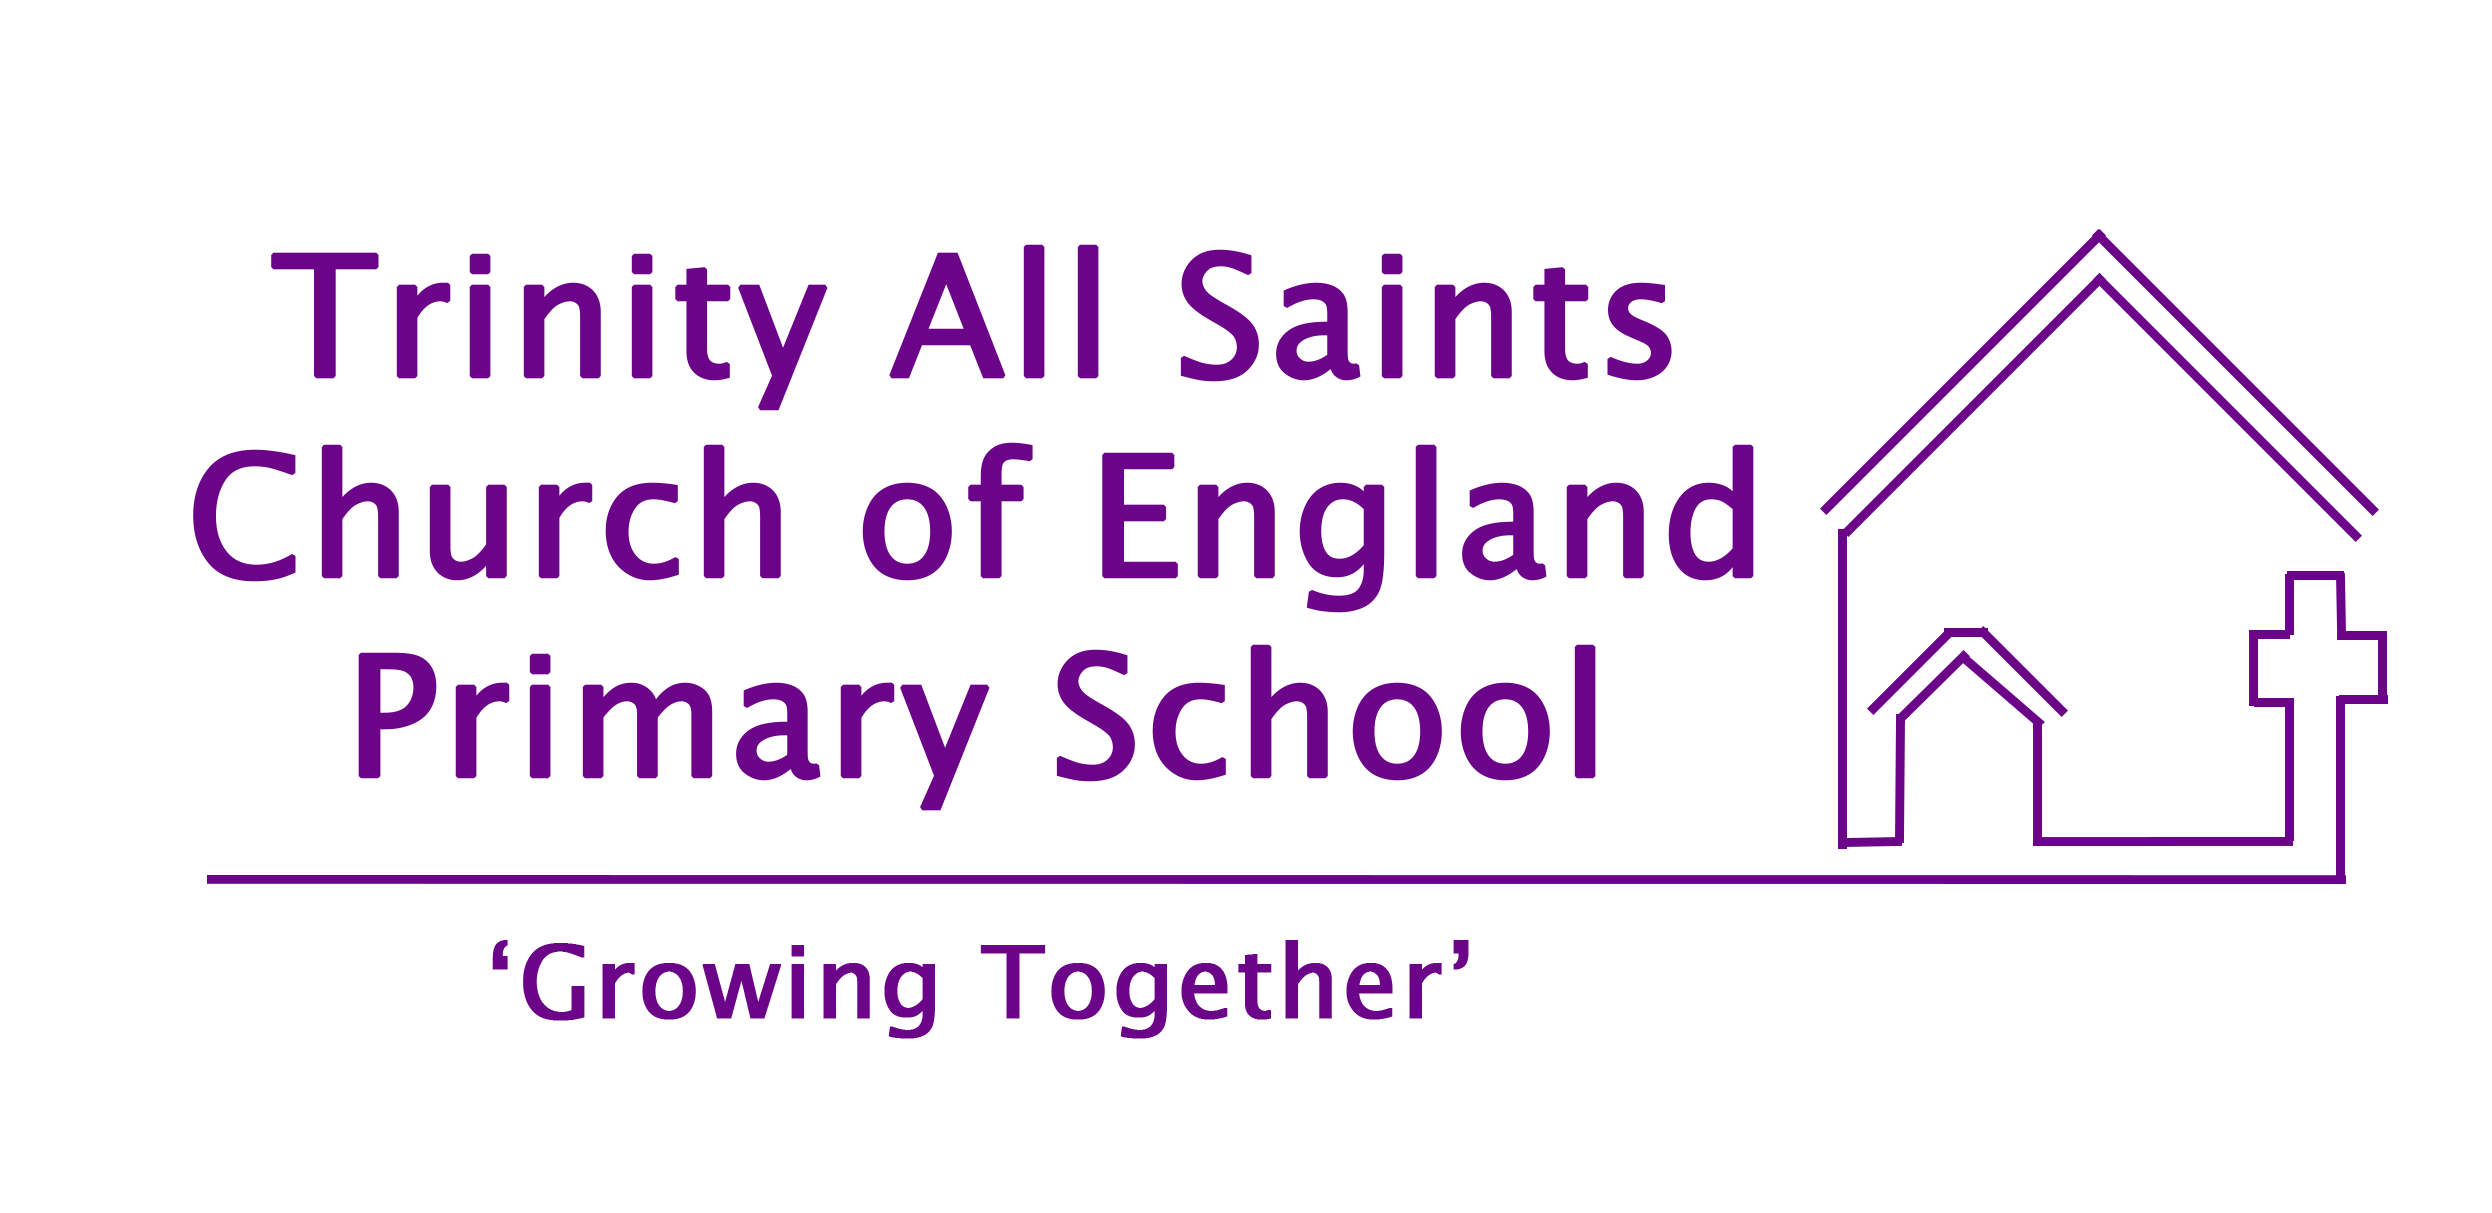 Trinity All Saints Church of England Primary School